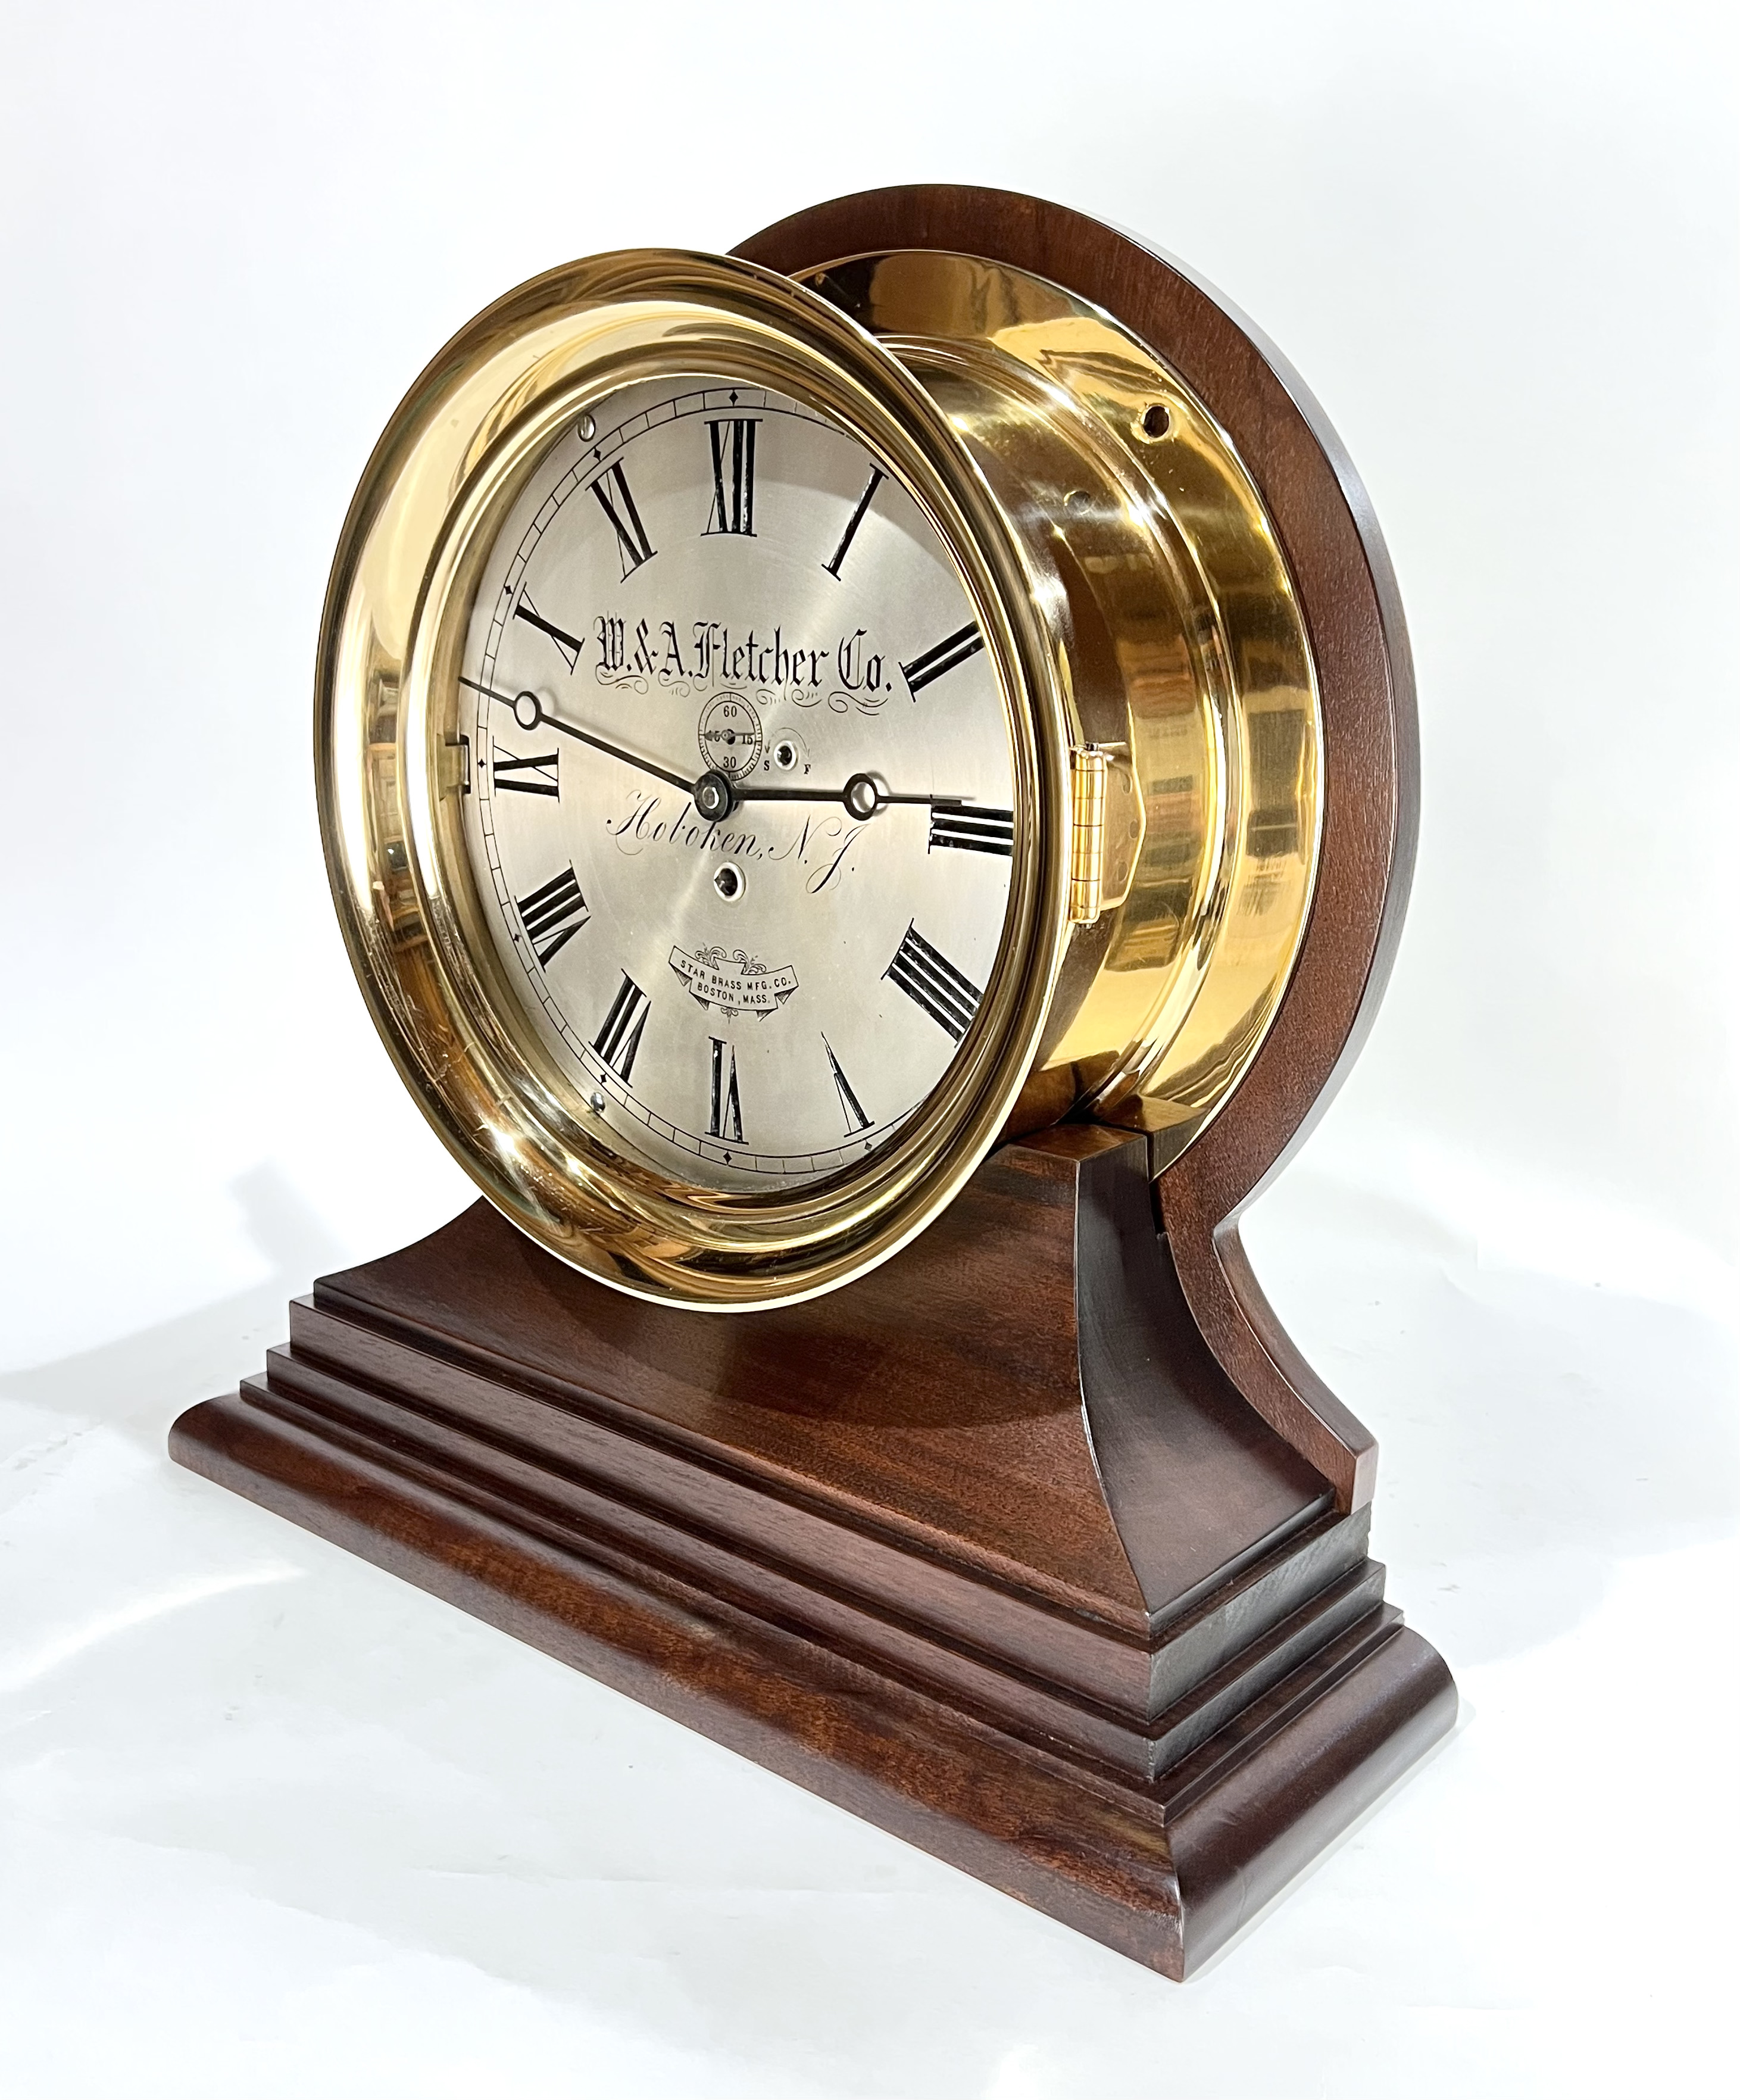 Eastman Clock Co. 10 Marine Clock for W & A Fletcher Co.